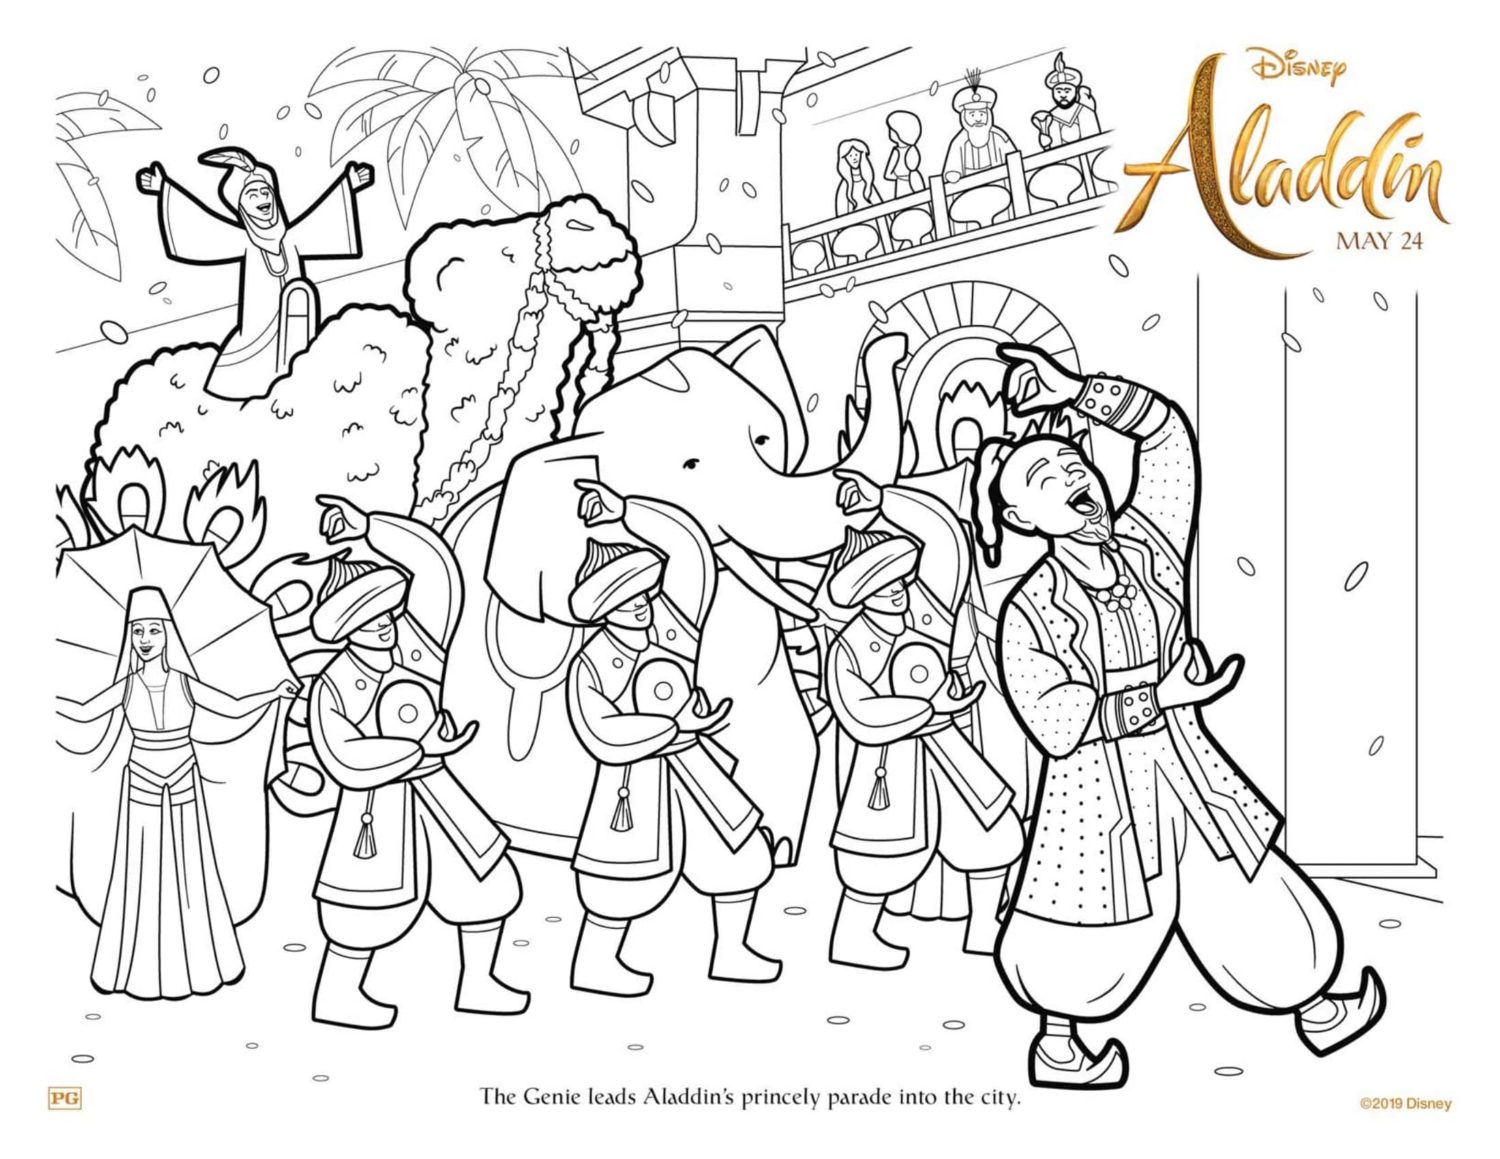 Aladdin's Parade Coloring Page and Activity Sheet